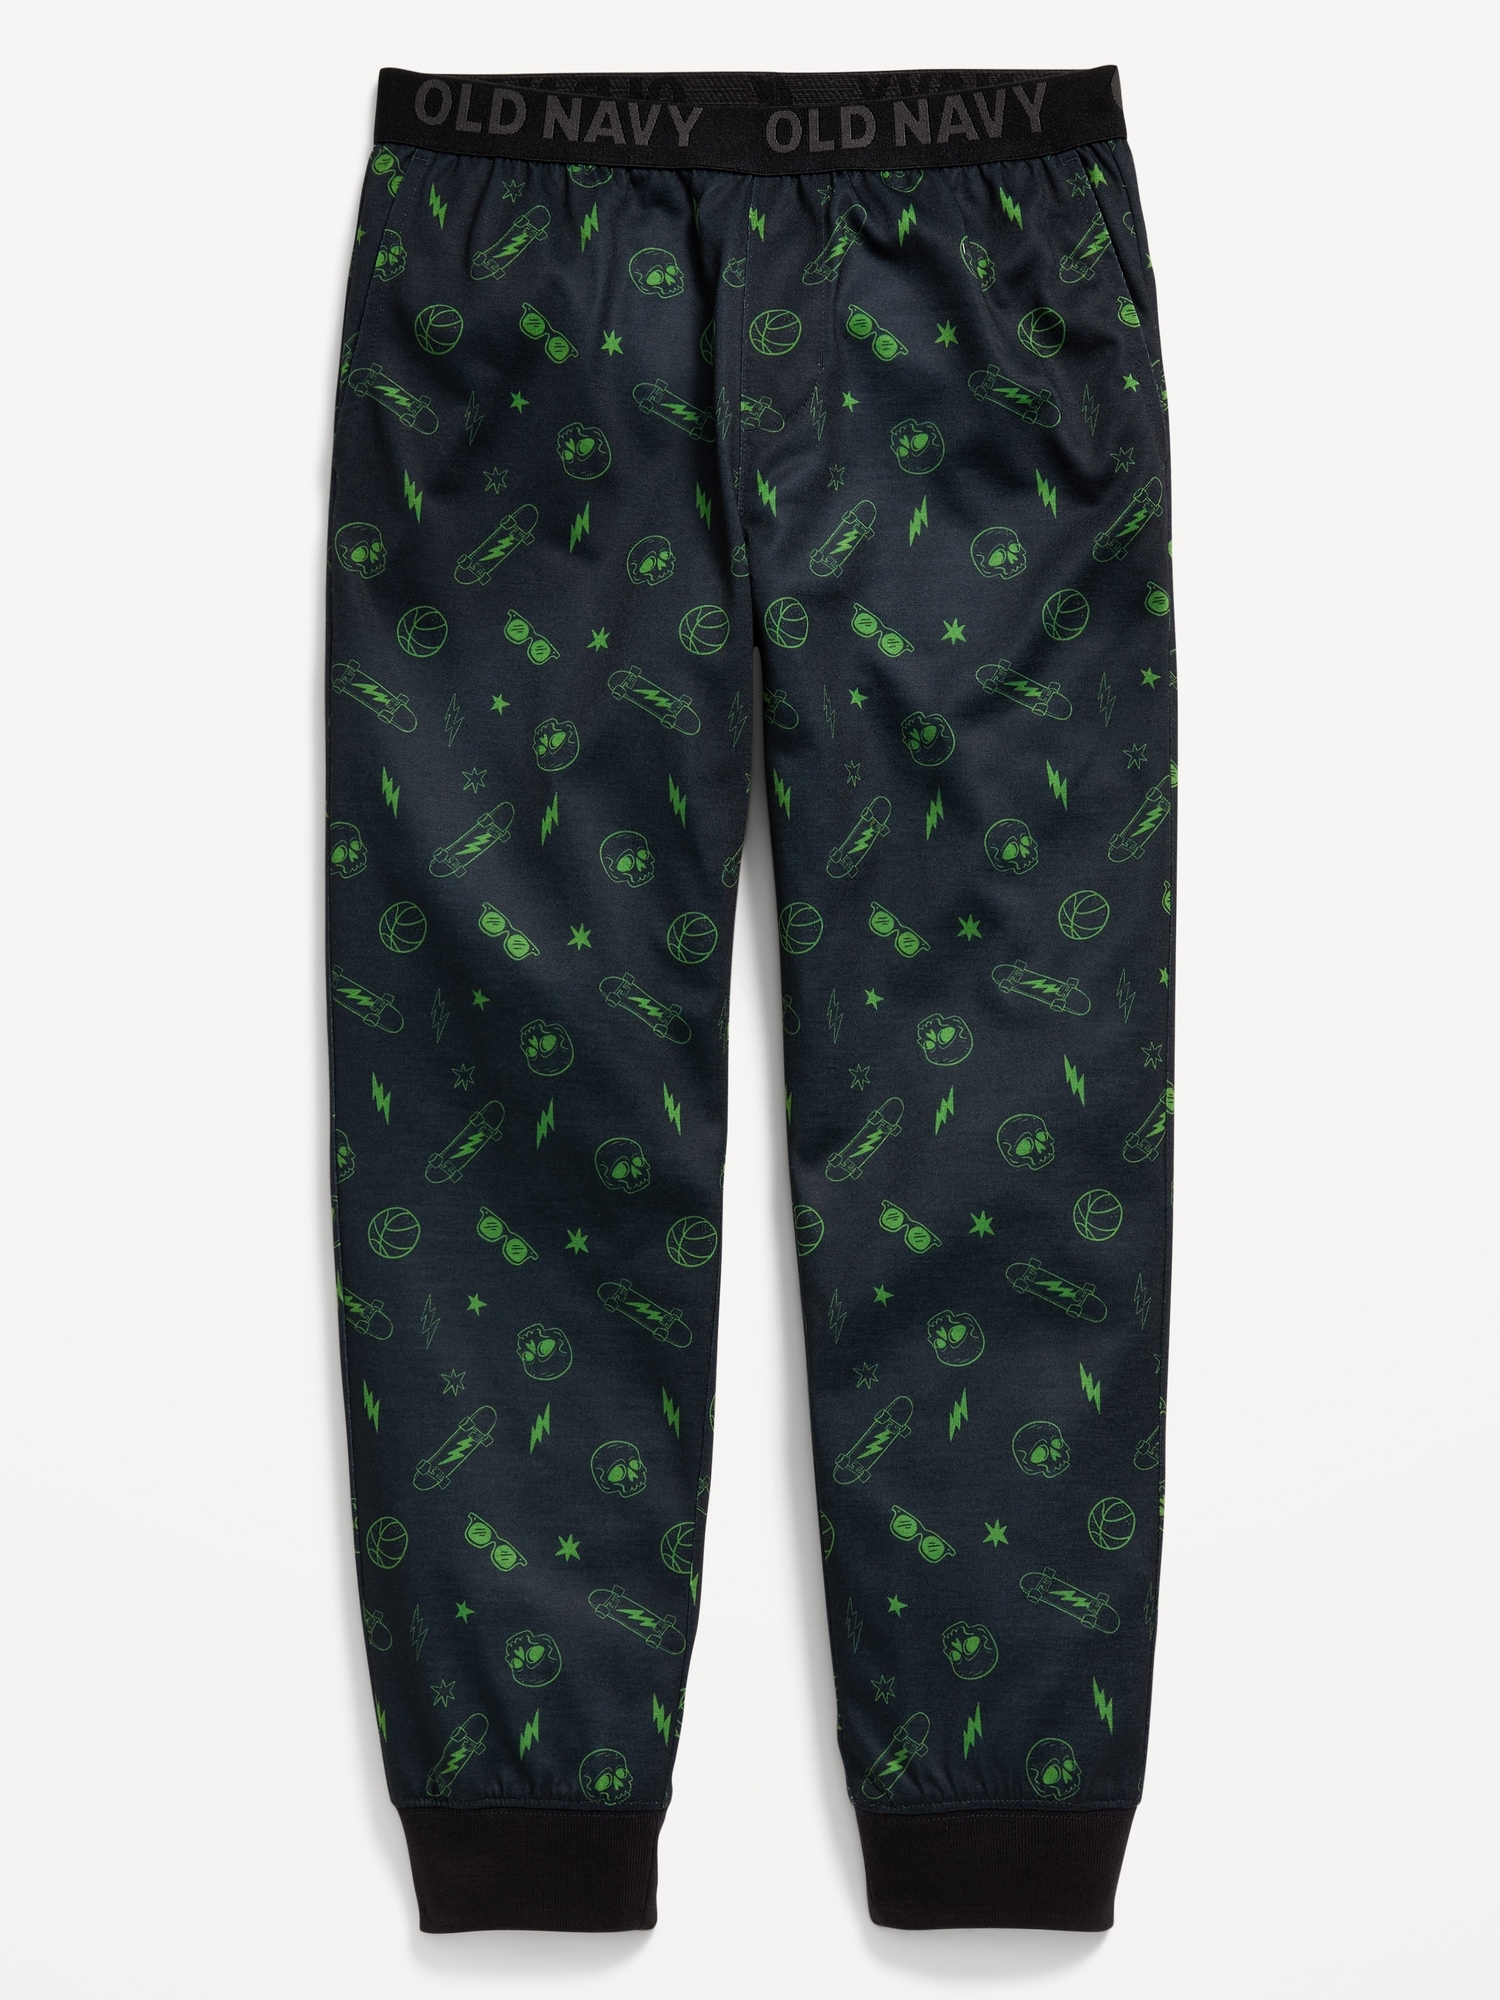 Printed Jersey-Knit Pajama Jogger Pants for Boys